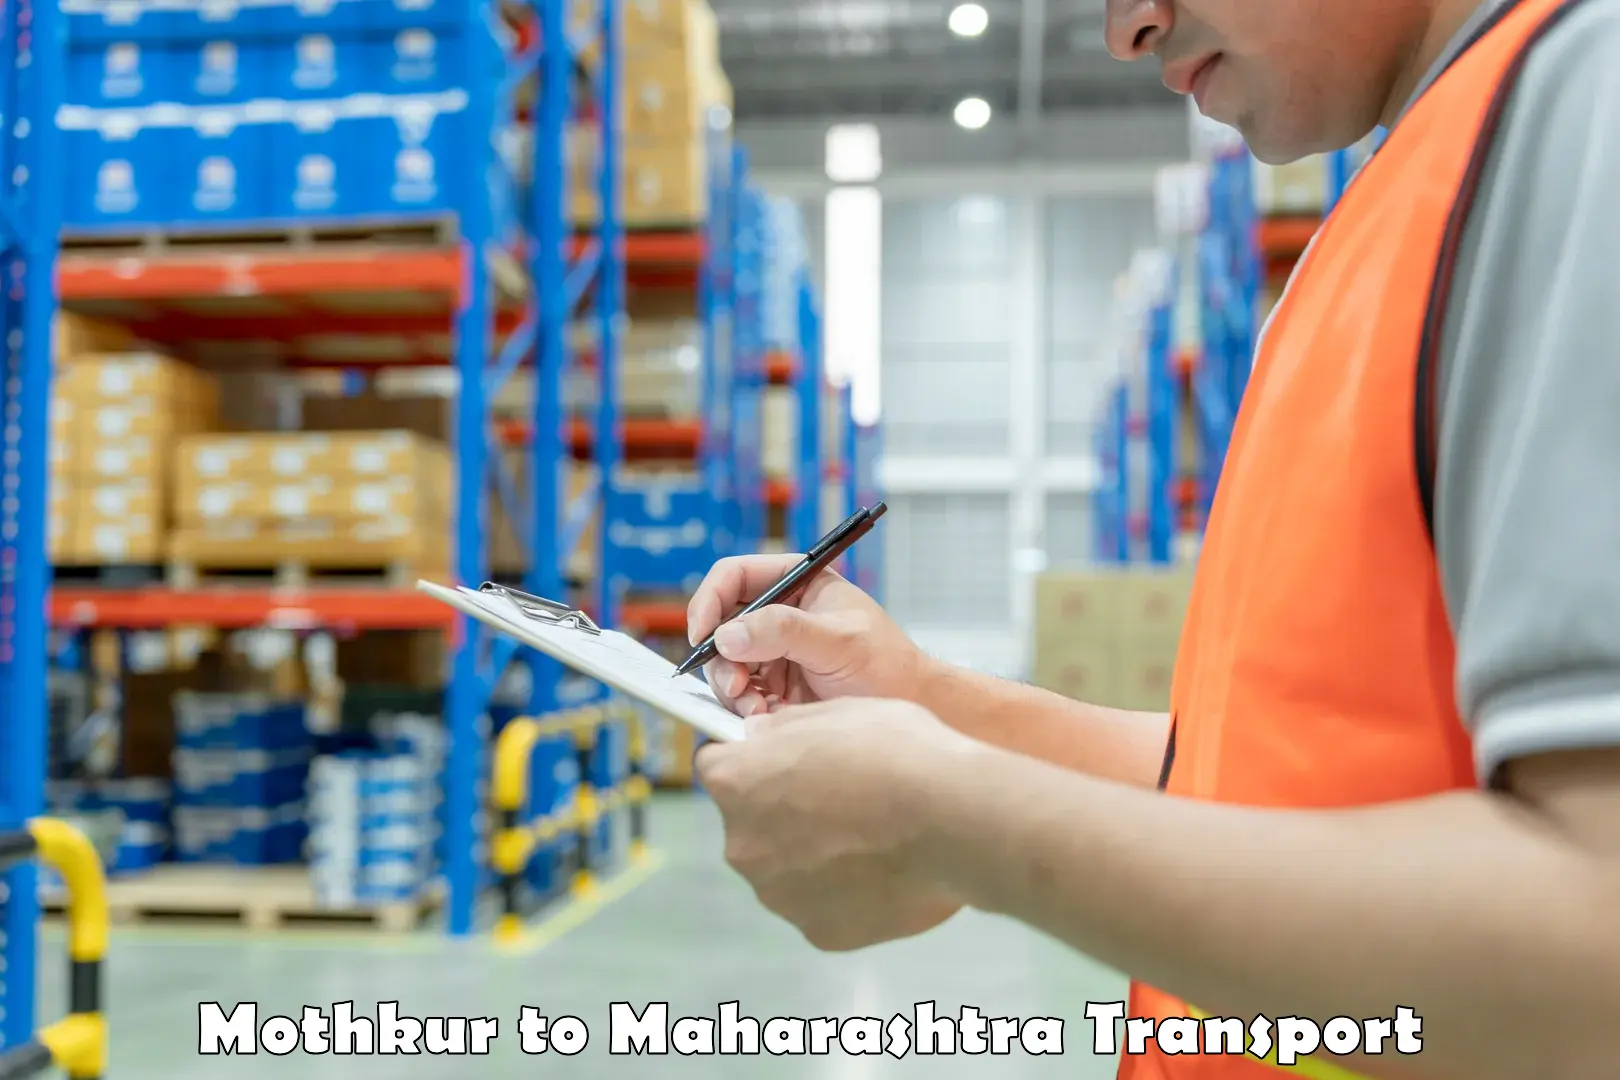 Truck transport companies in India Mothkur to Borivali